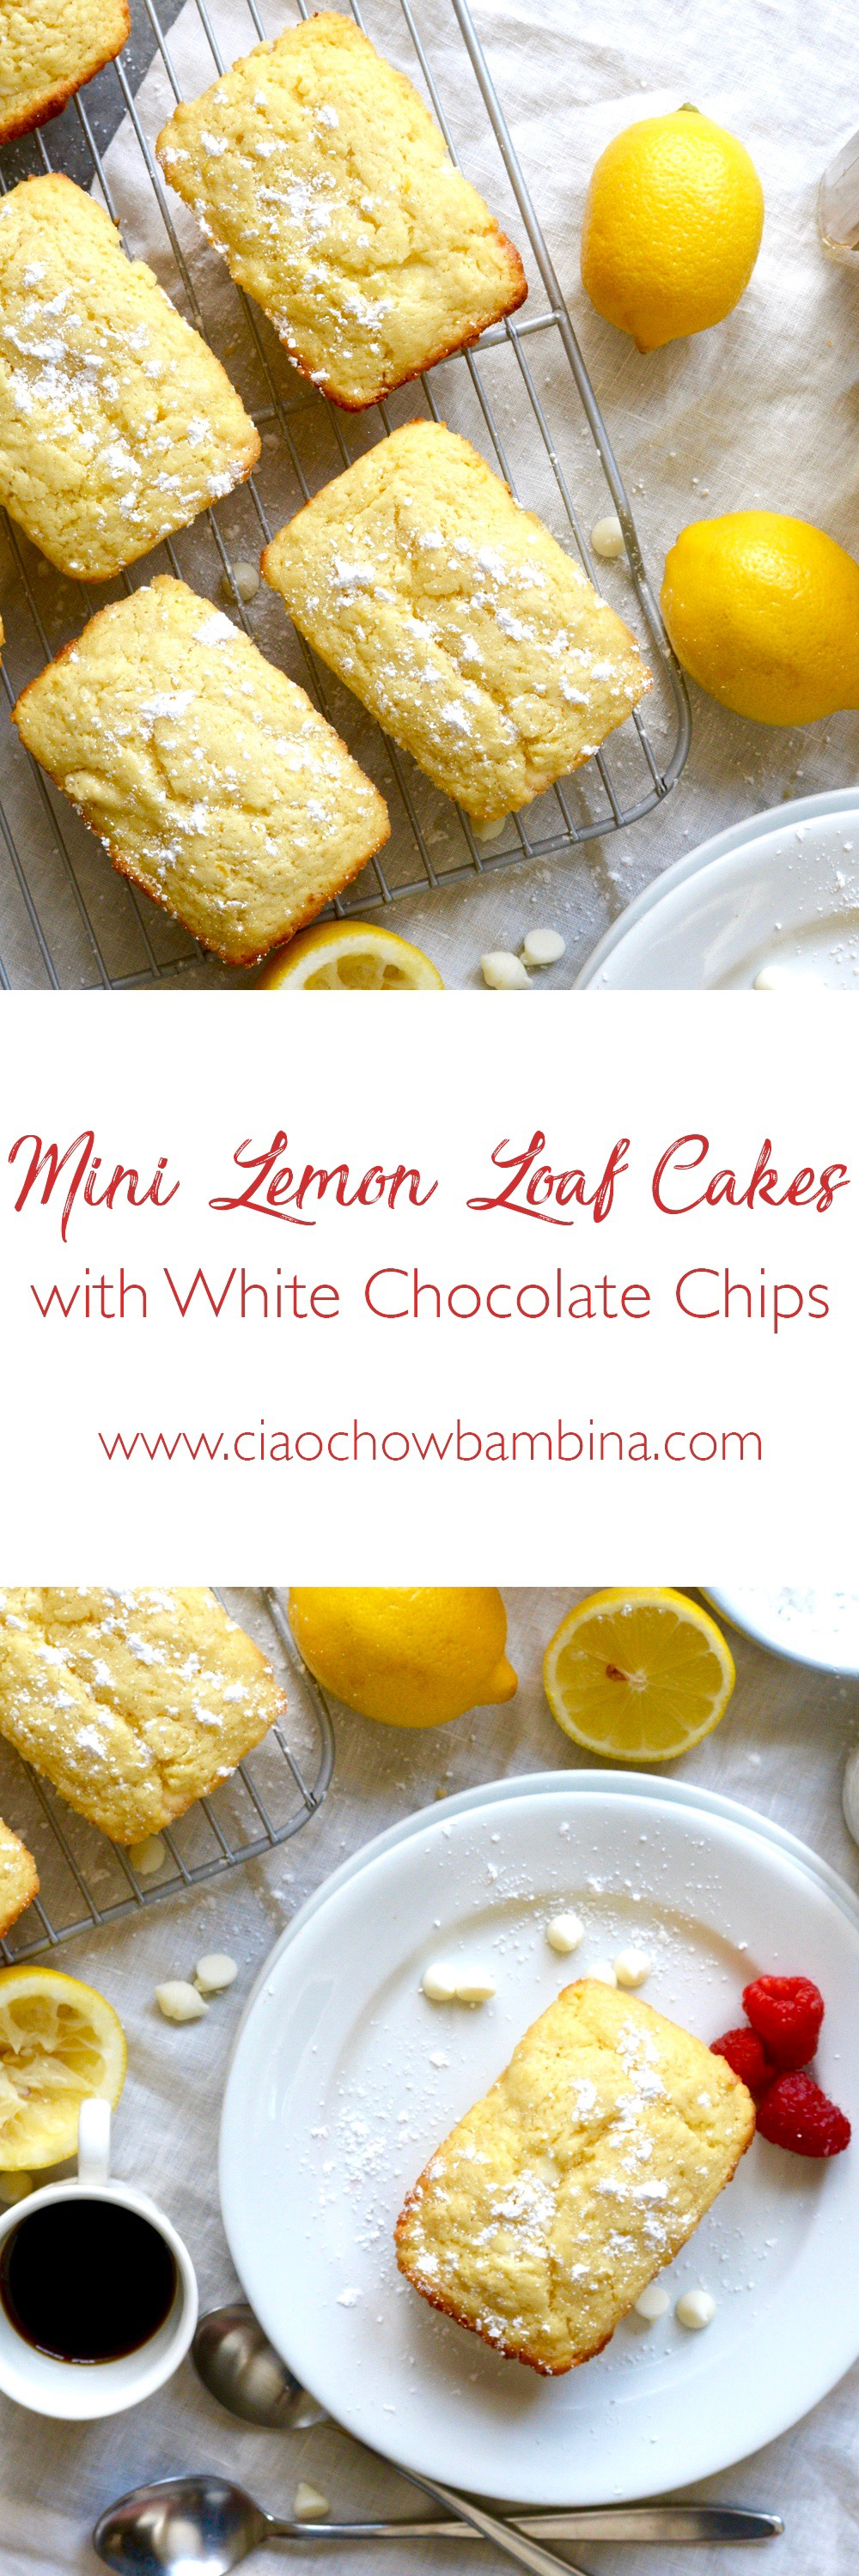 Mini Lemon Loaf Cakes with White Chocolate Chips ciaochowbambina.com